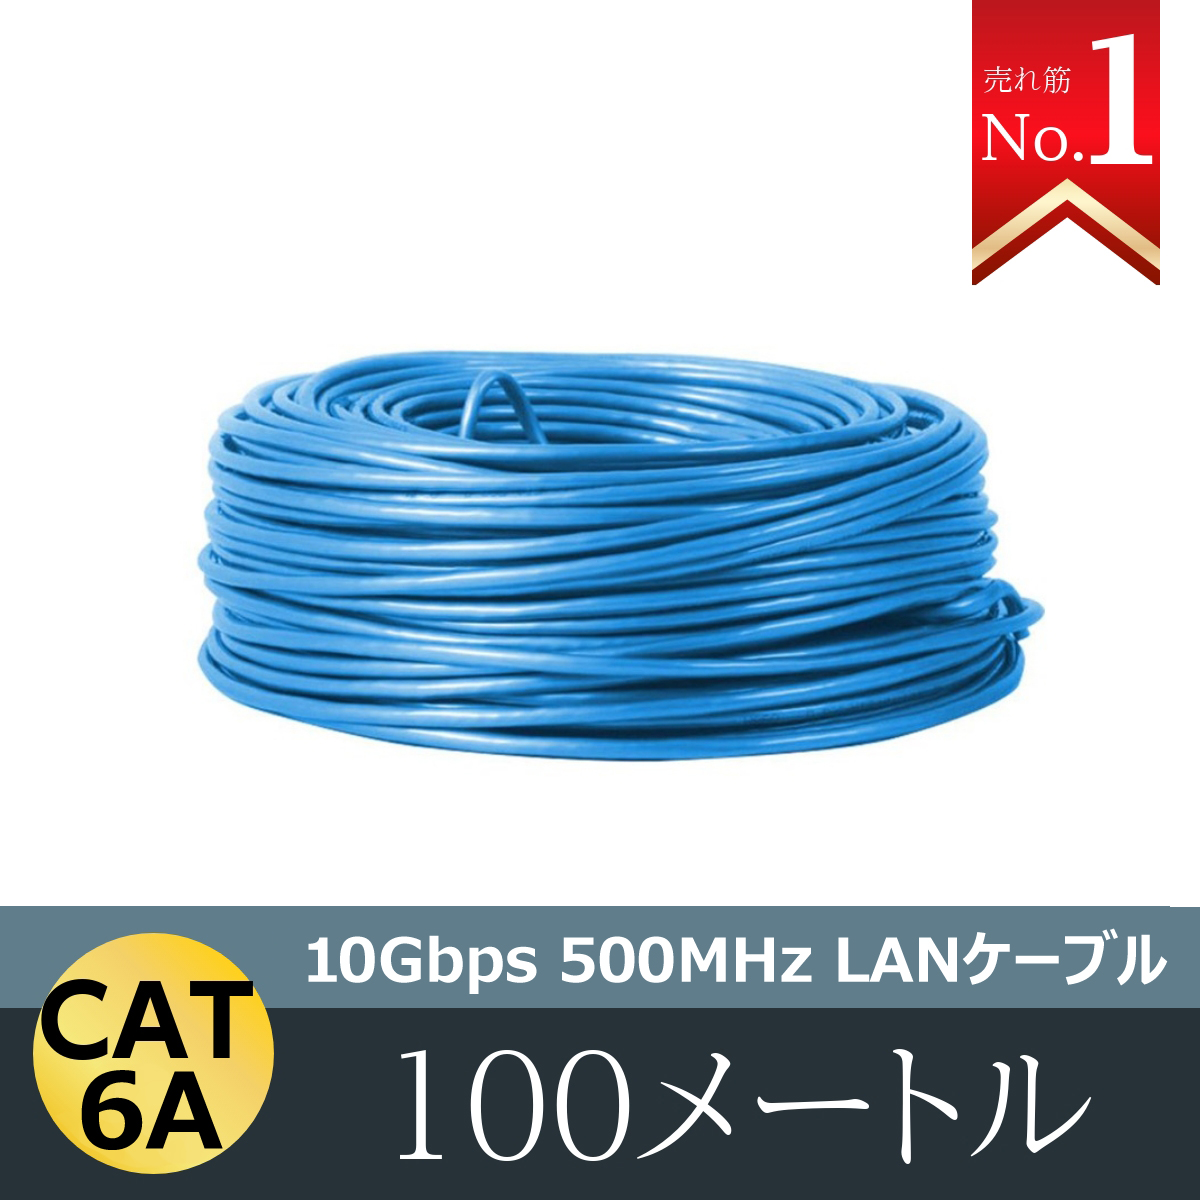 CAT 6A LANケーブル100m 100メートル 10ギガビット 10Gbps 500MHz 光回線対応 超高速通信 ルーター パソコン  プリンター 防犯カメラネットワーク工事 業務用